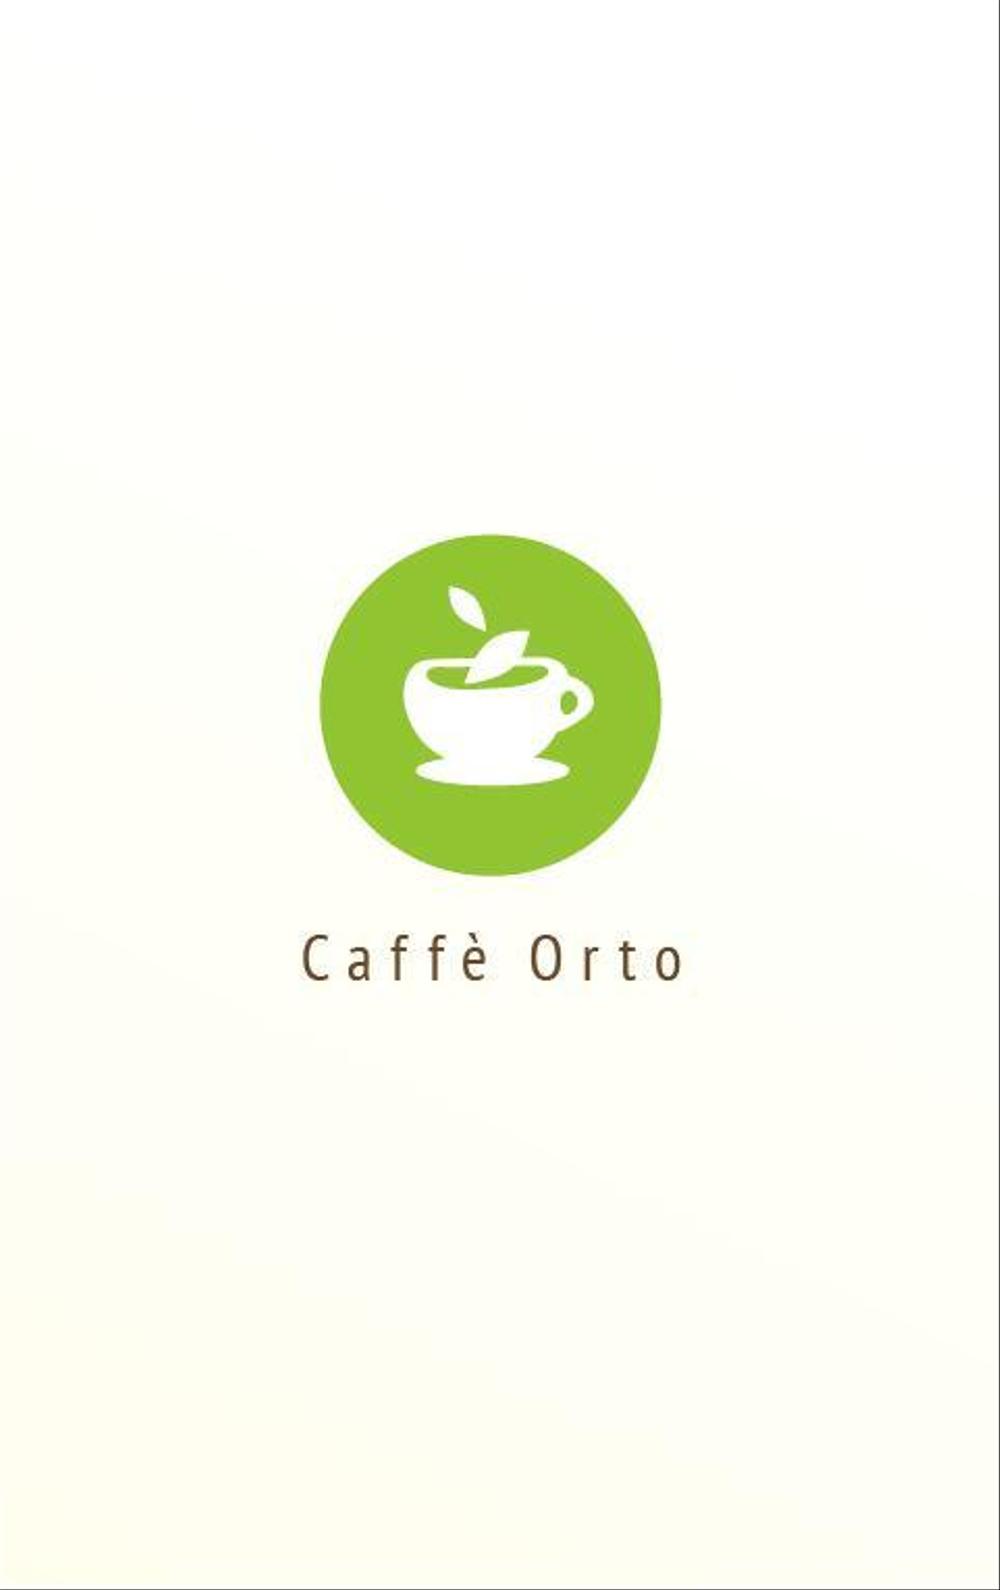 caffeorto_logo-01.jpg